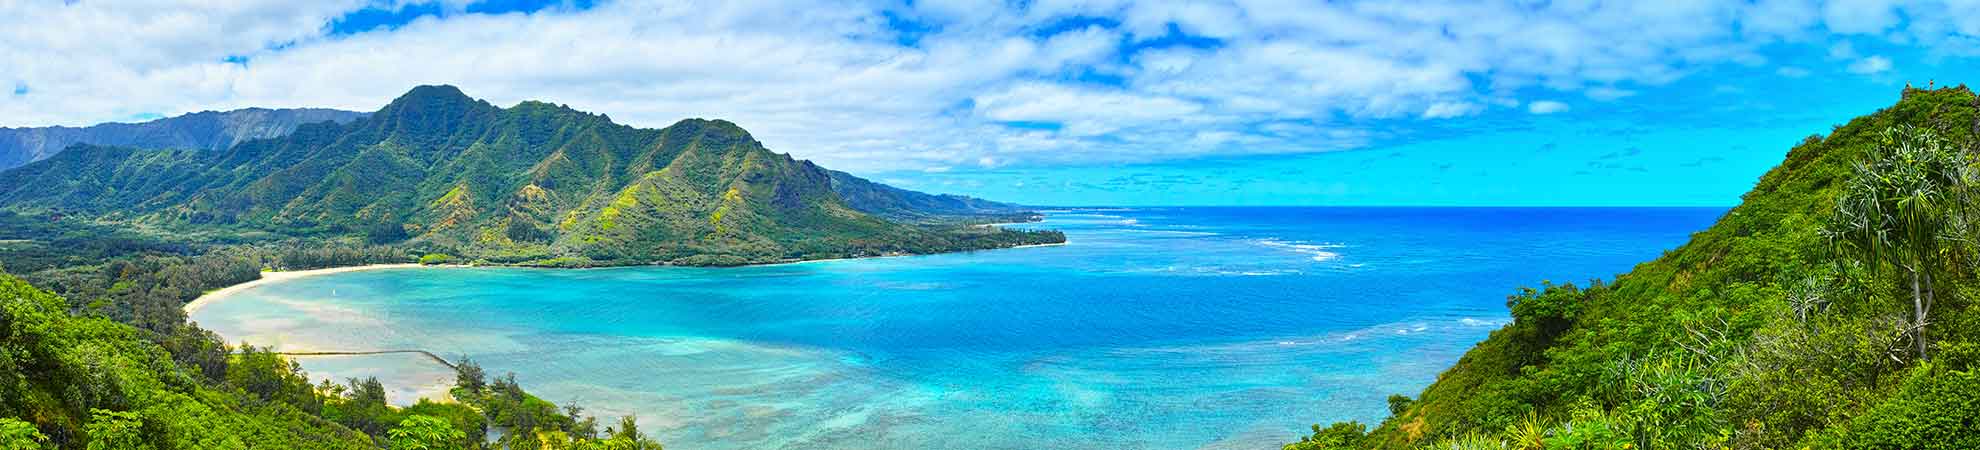 voyage tout inclus hawaii